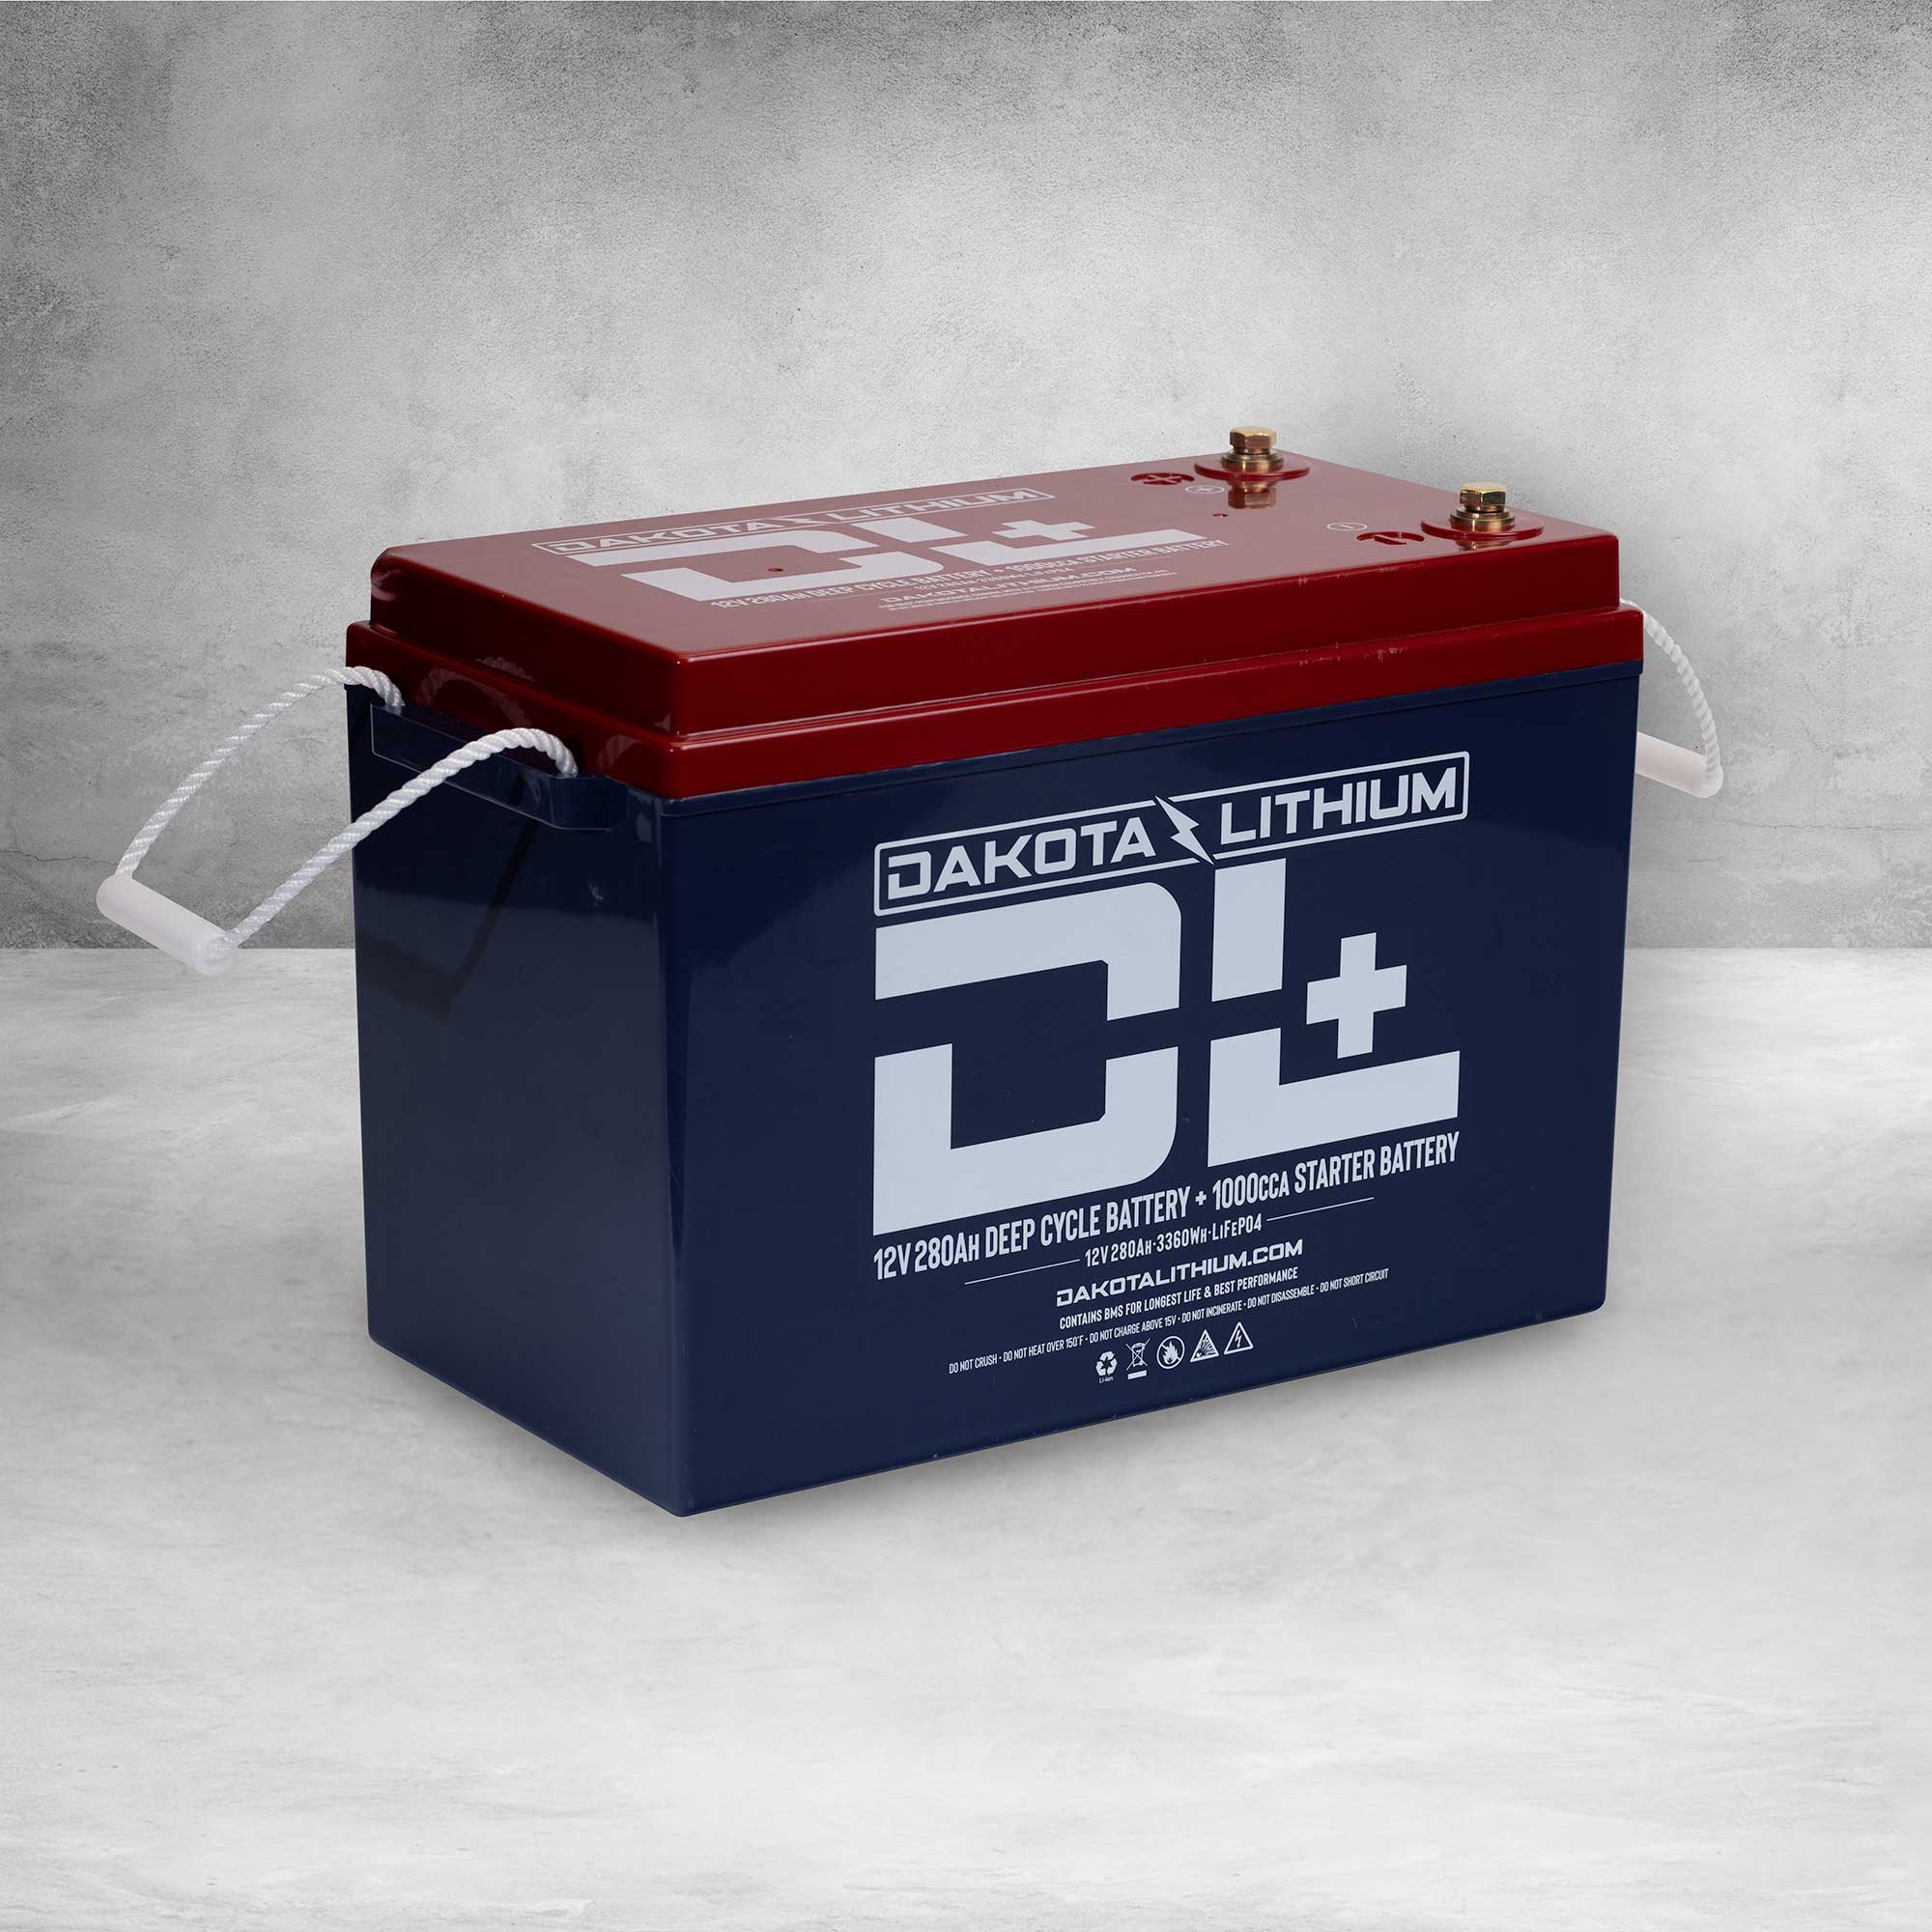 Dakota Lithium PLUS 12V 280AH Dual Purpose Battery